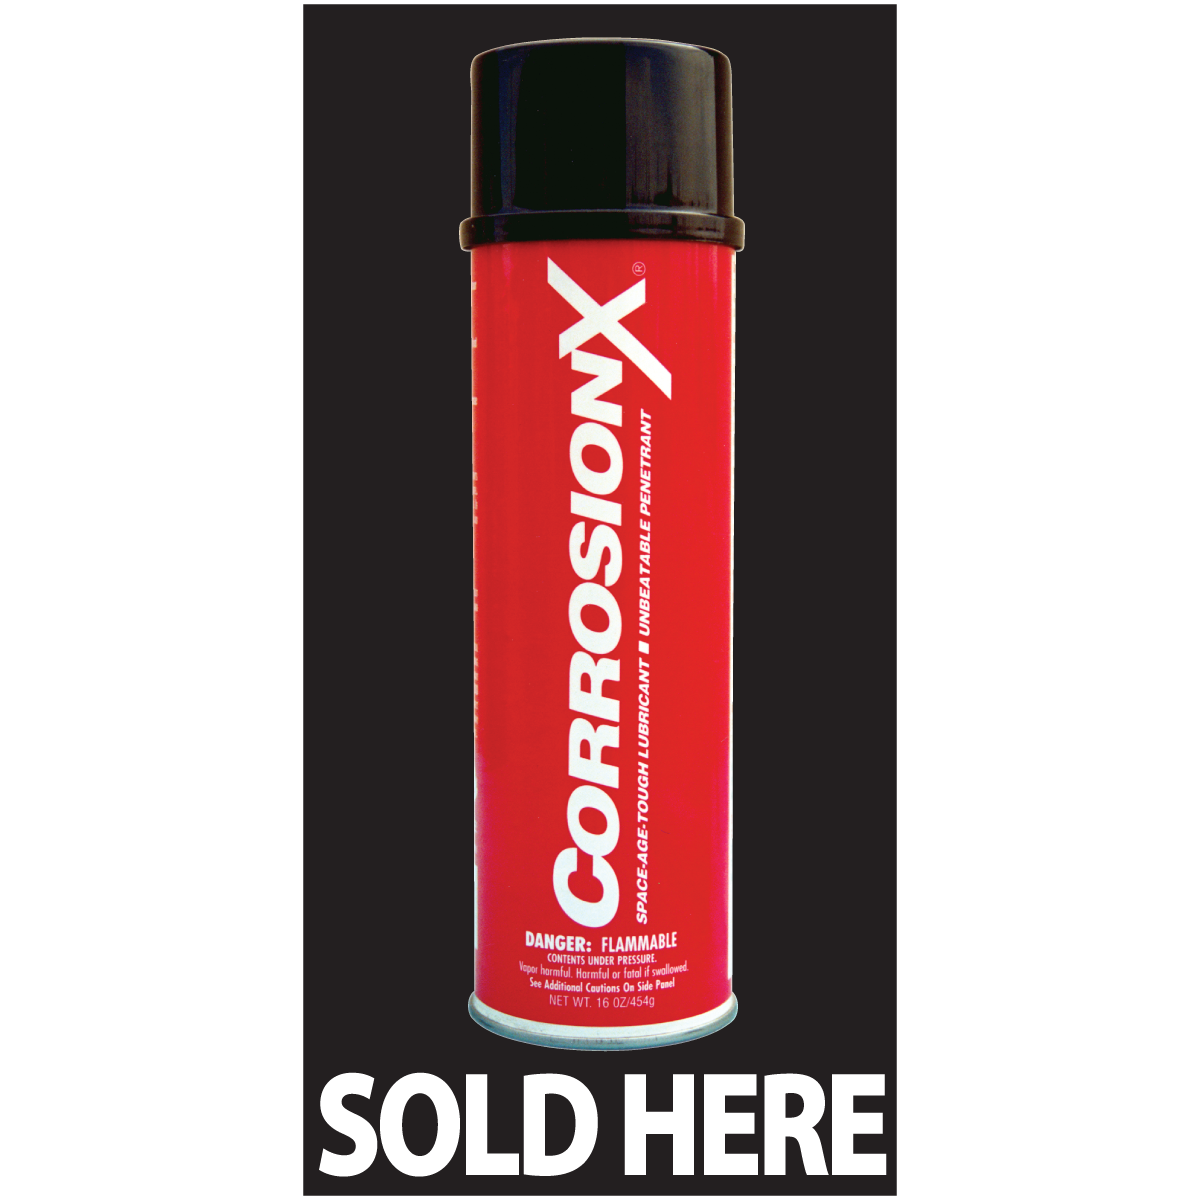 Retail door sticker "CorrosionX Sold Here"